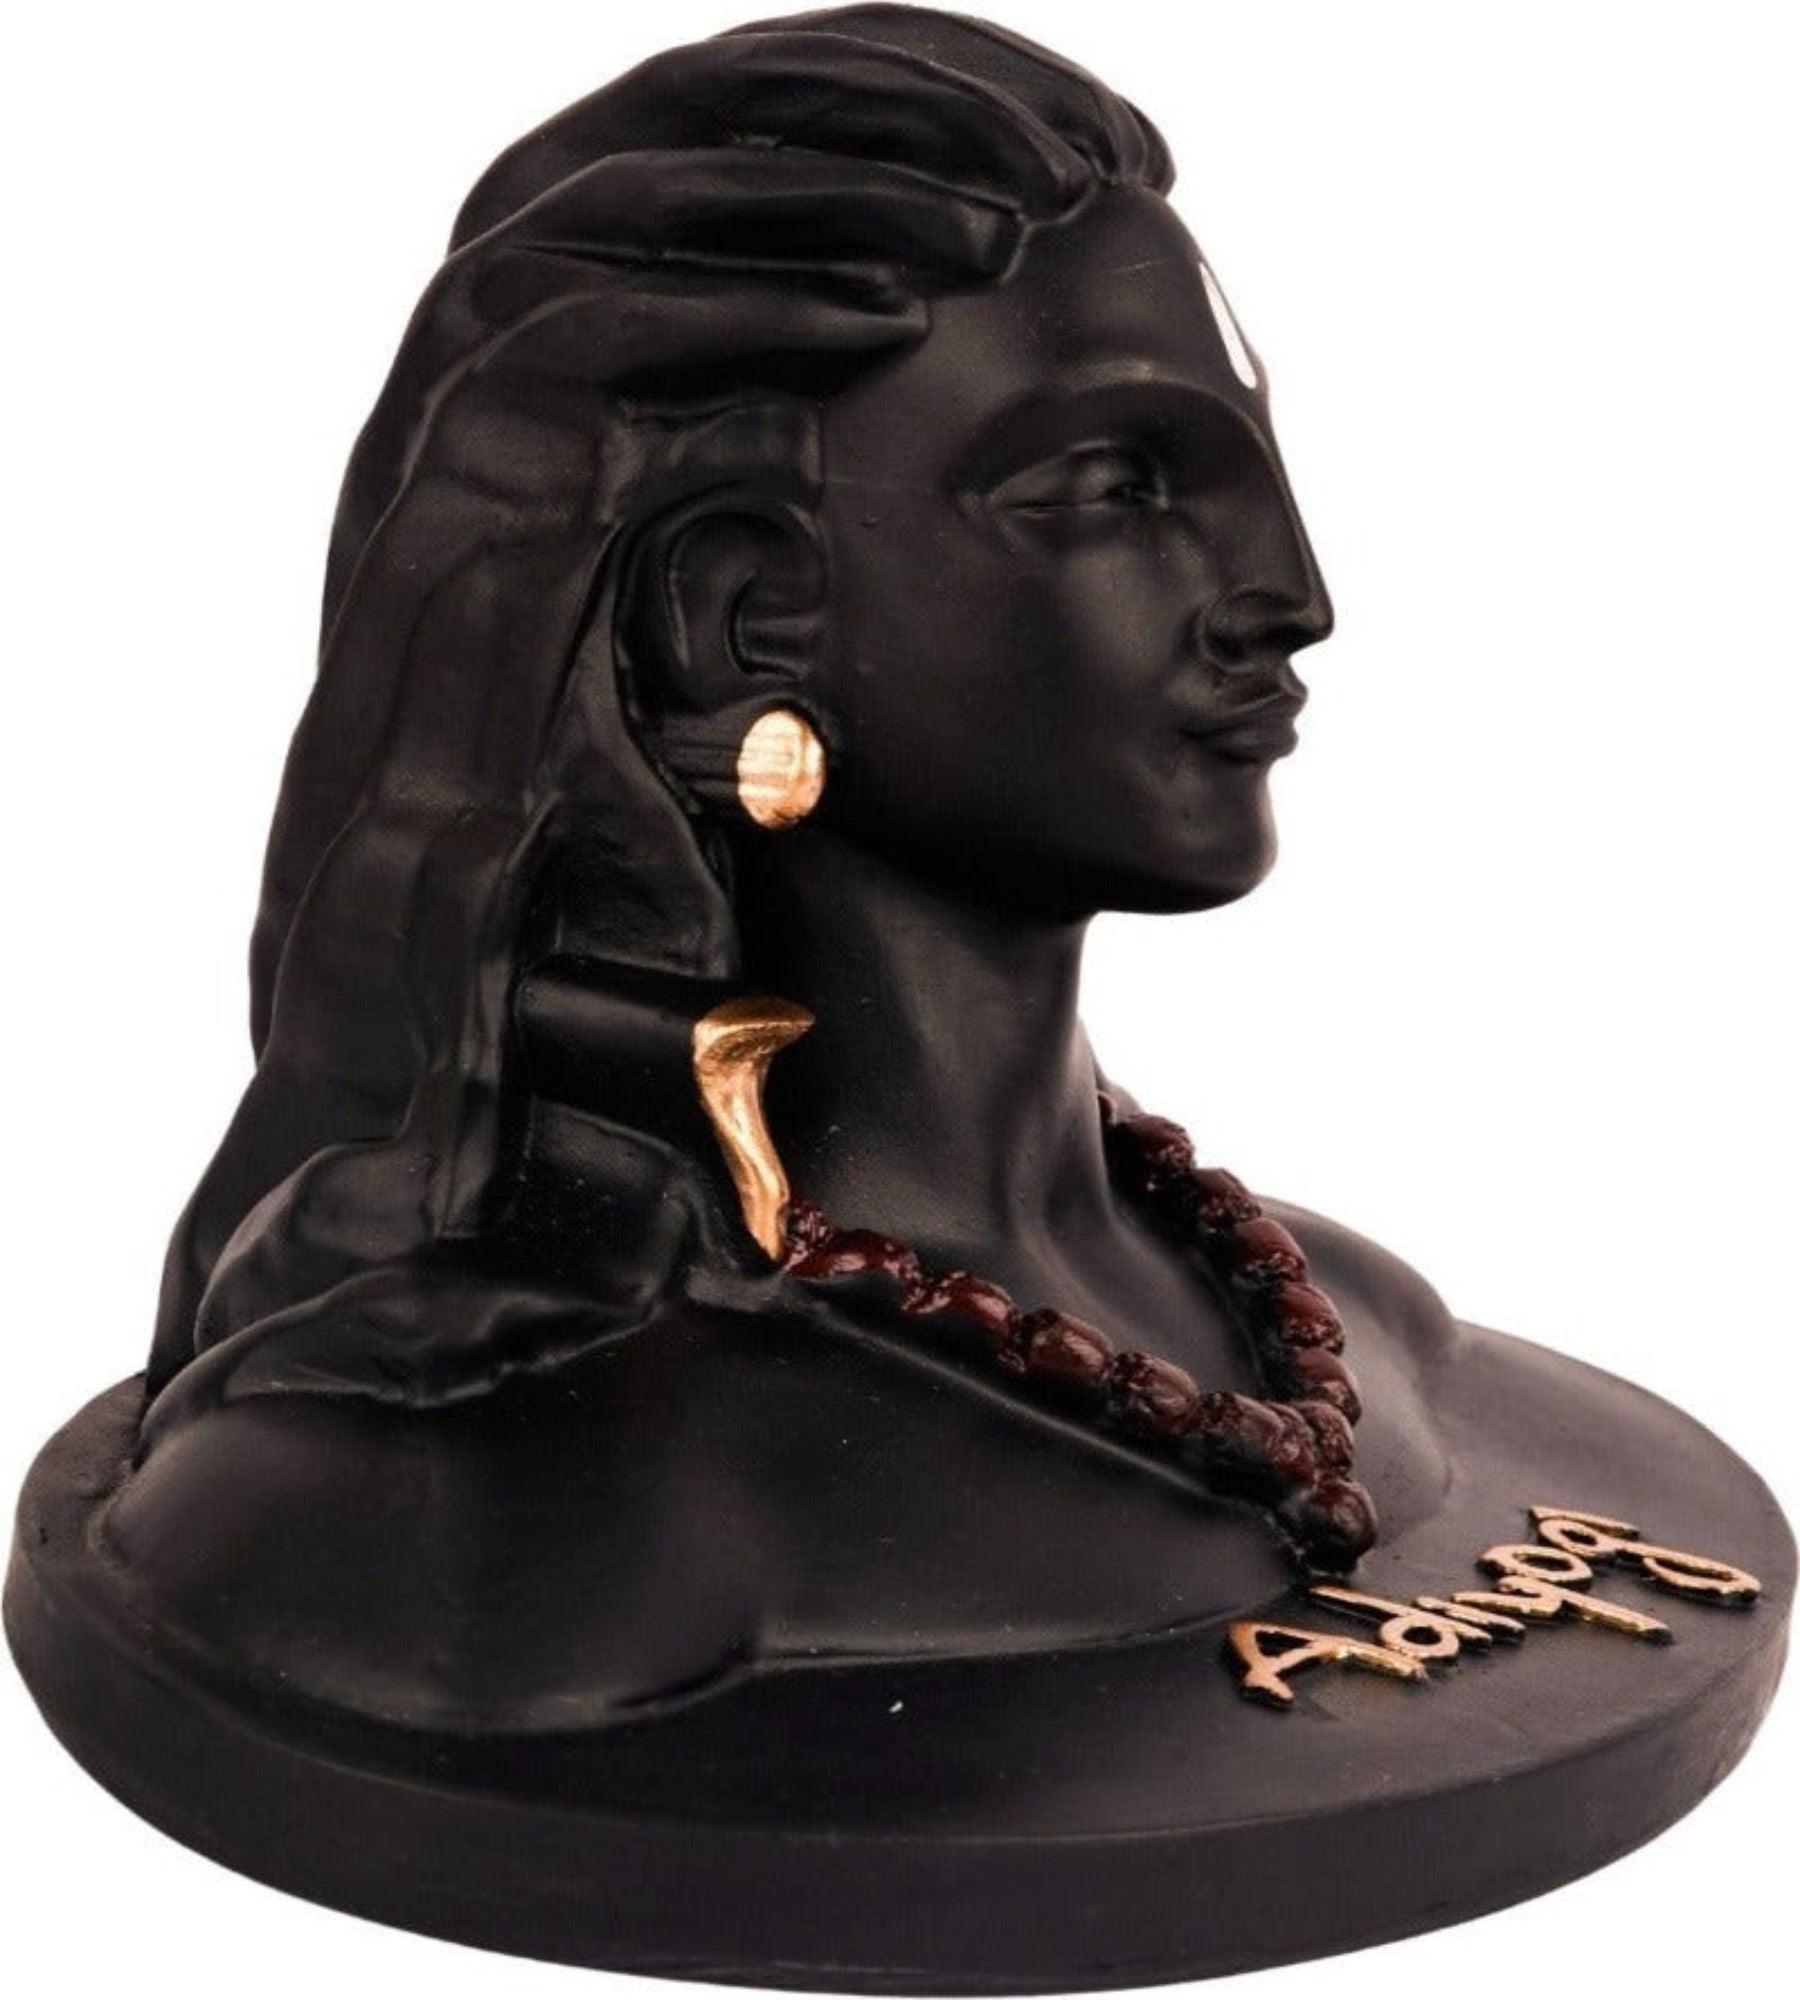 Black colour Adiyogi statue for home decorative and car dashboard